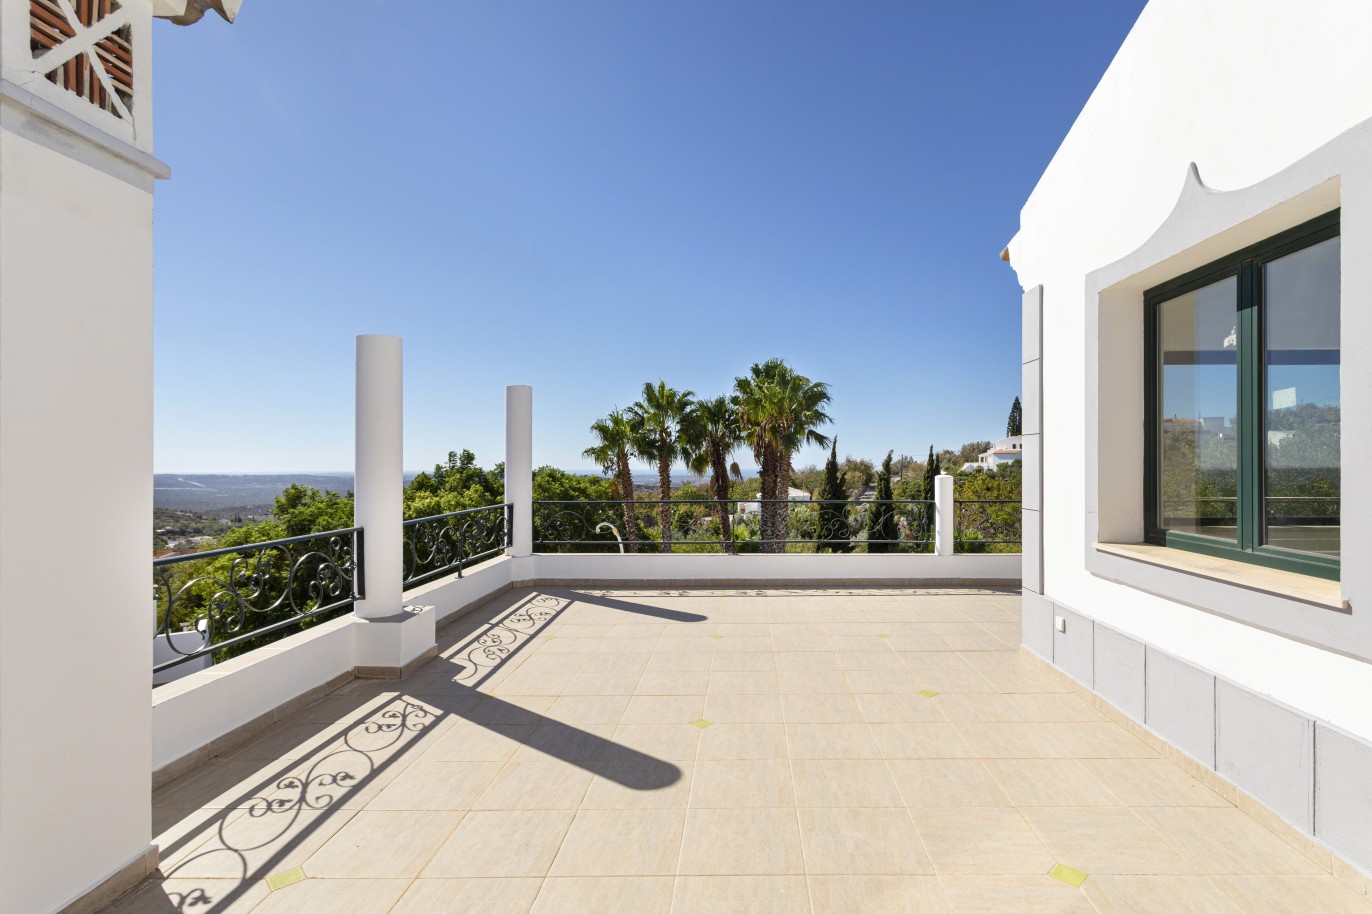 Villa zum Verkauf mit pool, Meer-und Bergblick, Loulé, Algarve, Portugal_236418